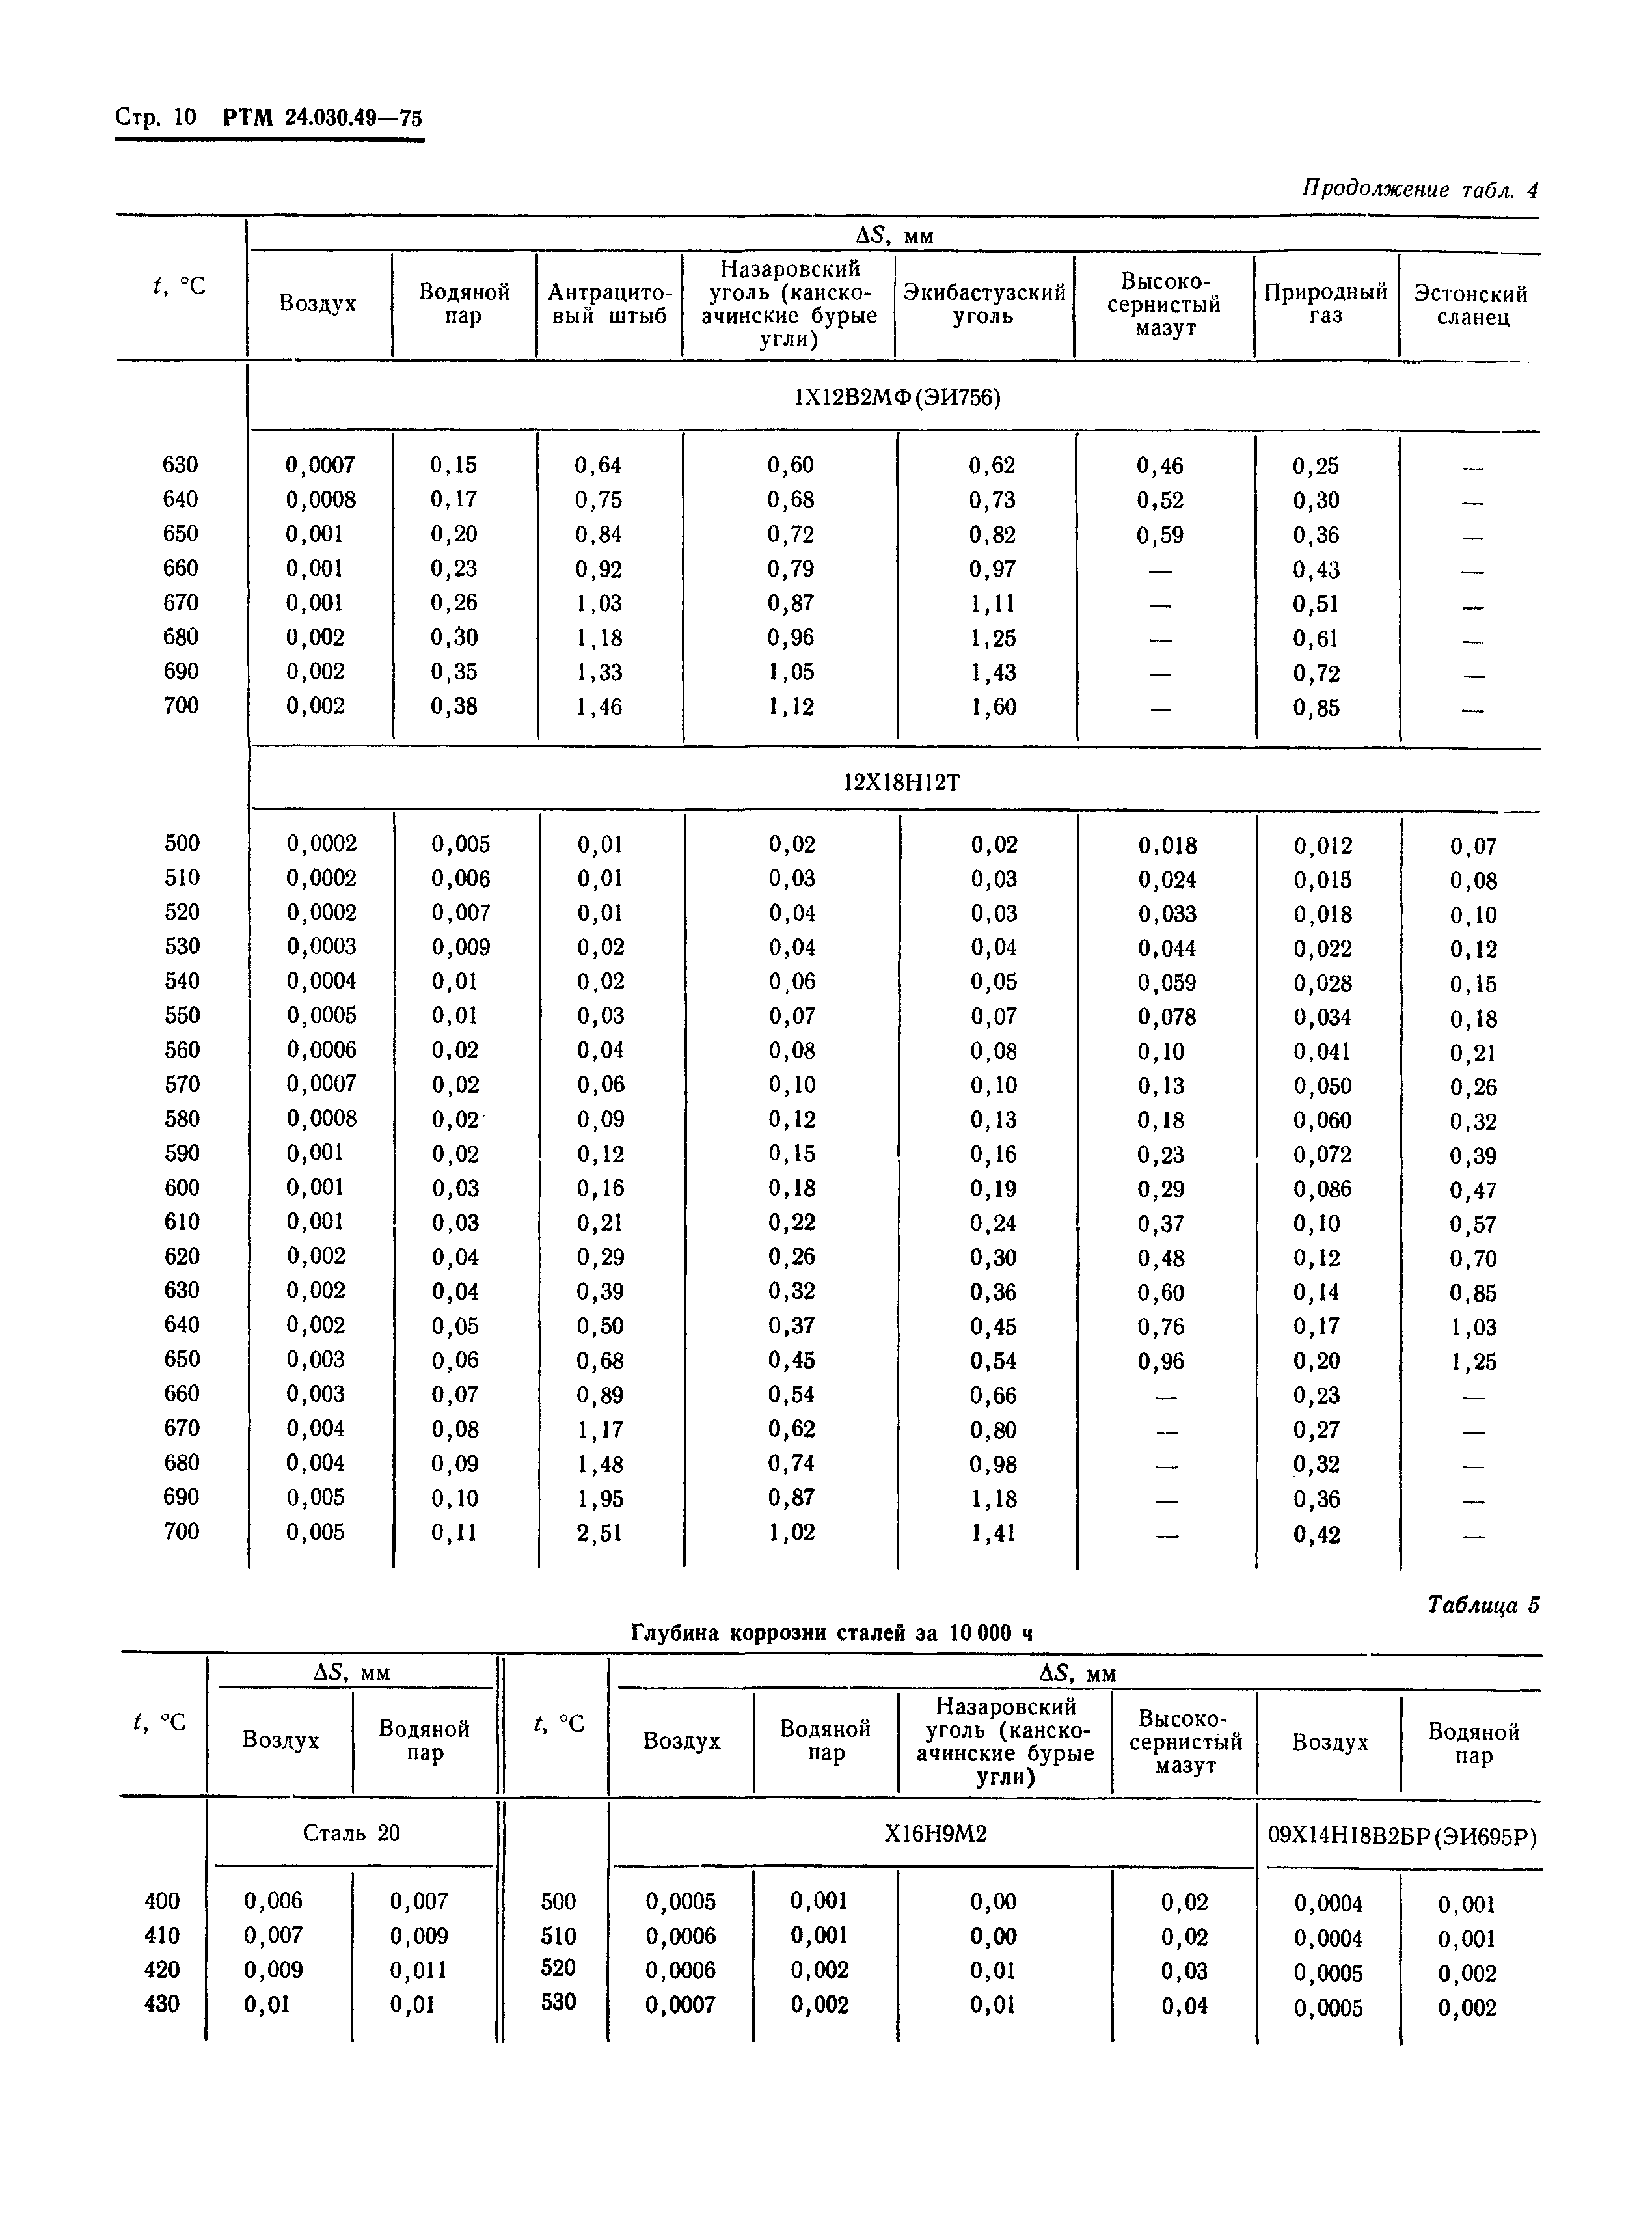 РТМ 24.030.49-75